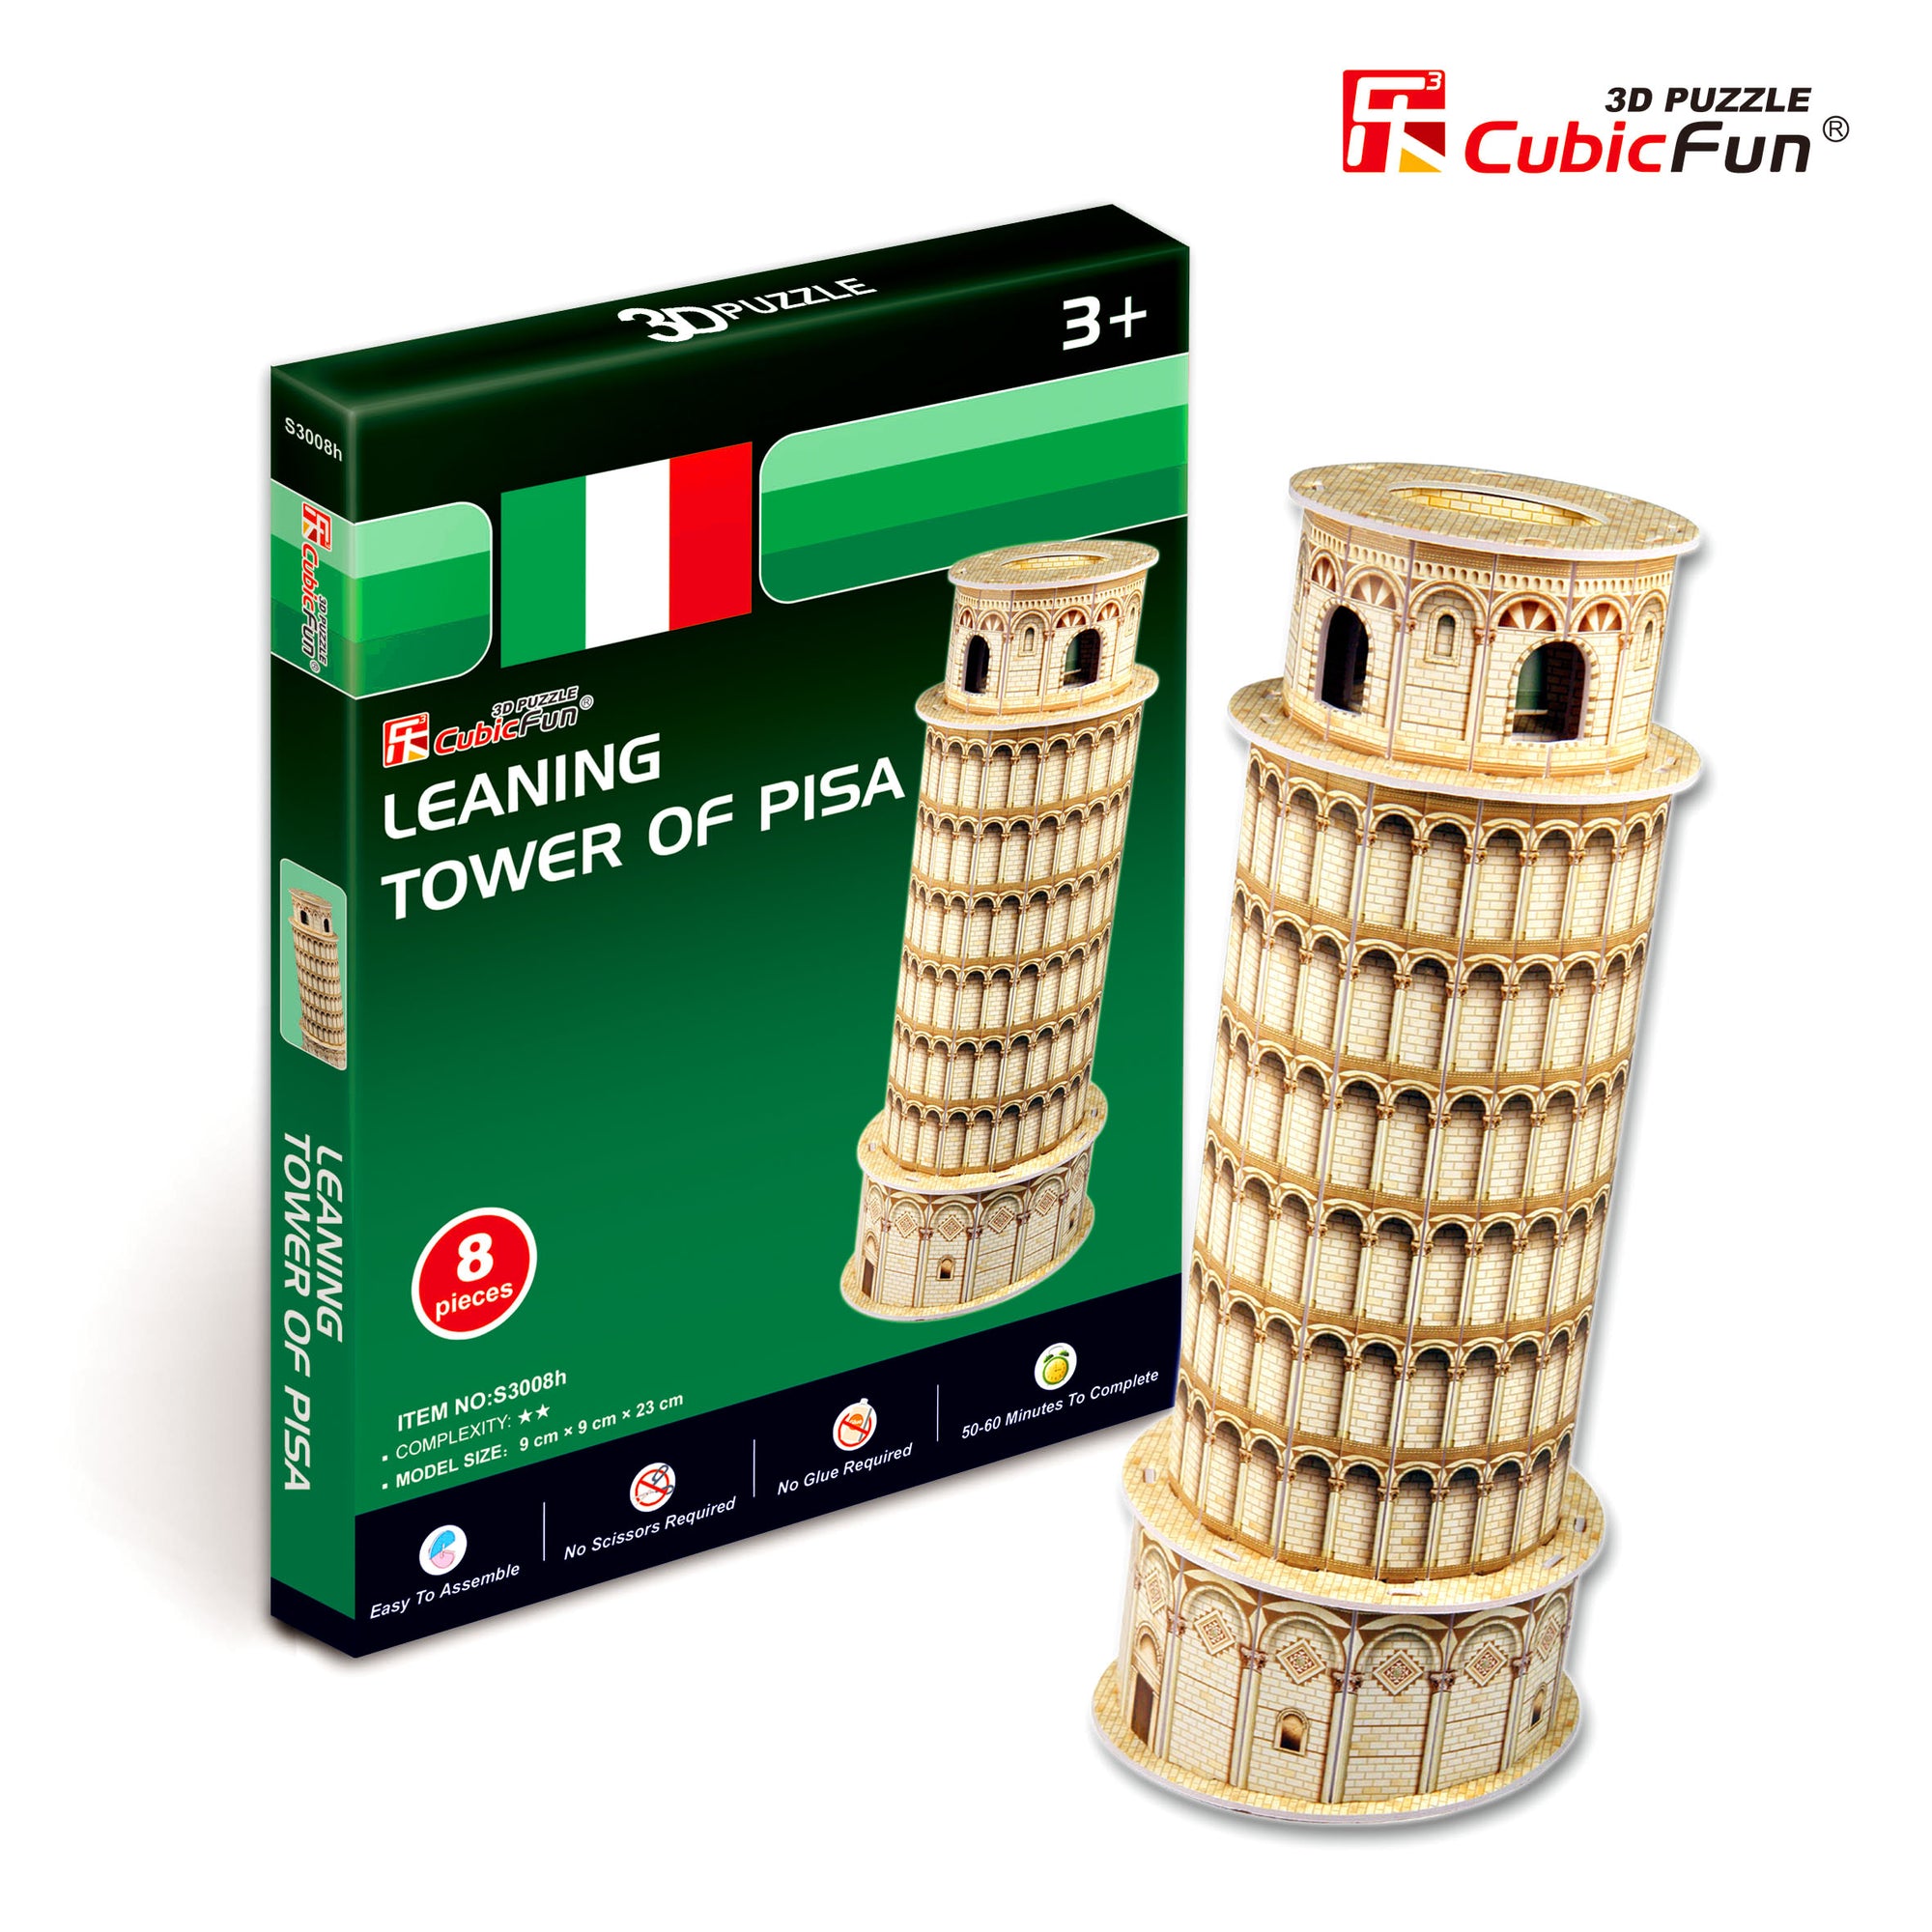 Tower of Pisa, 8pc 3D Puzzle